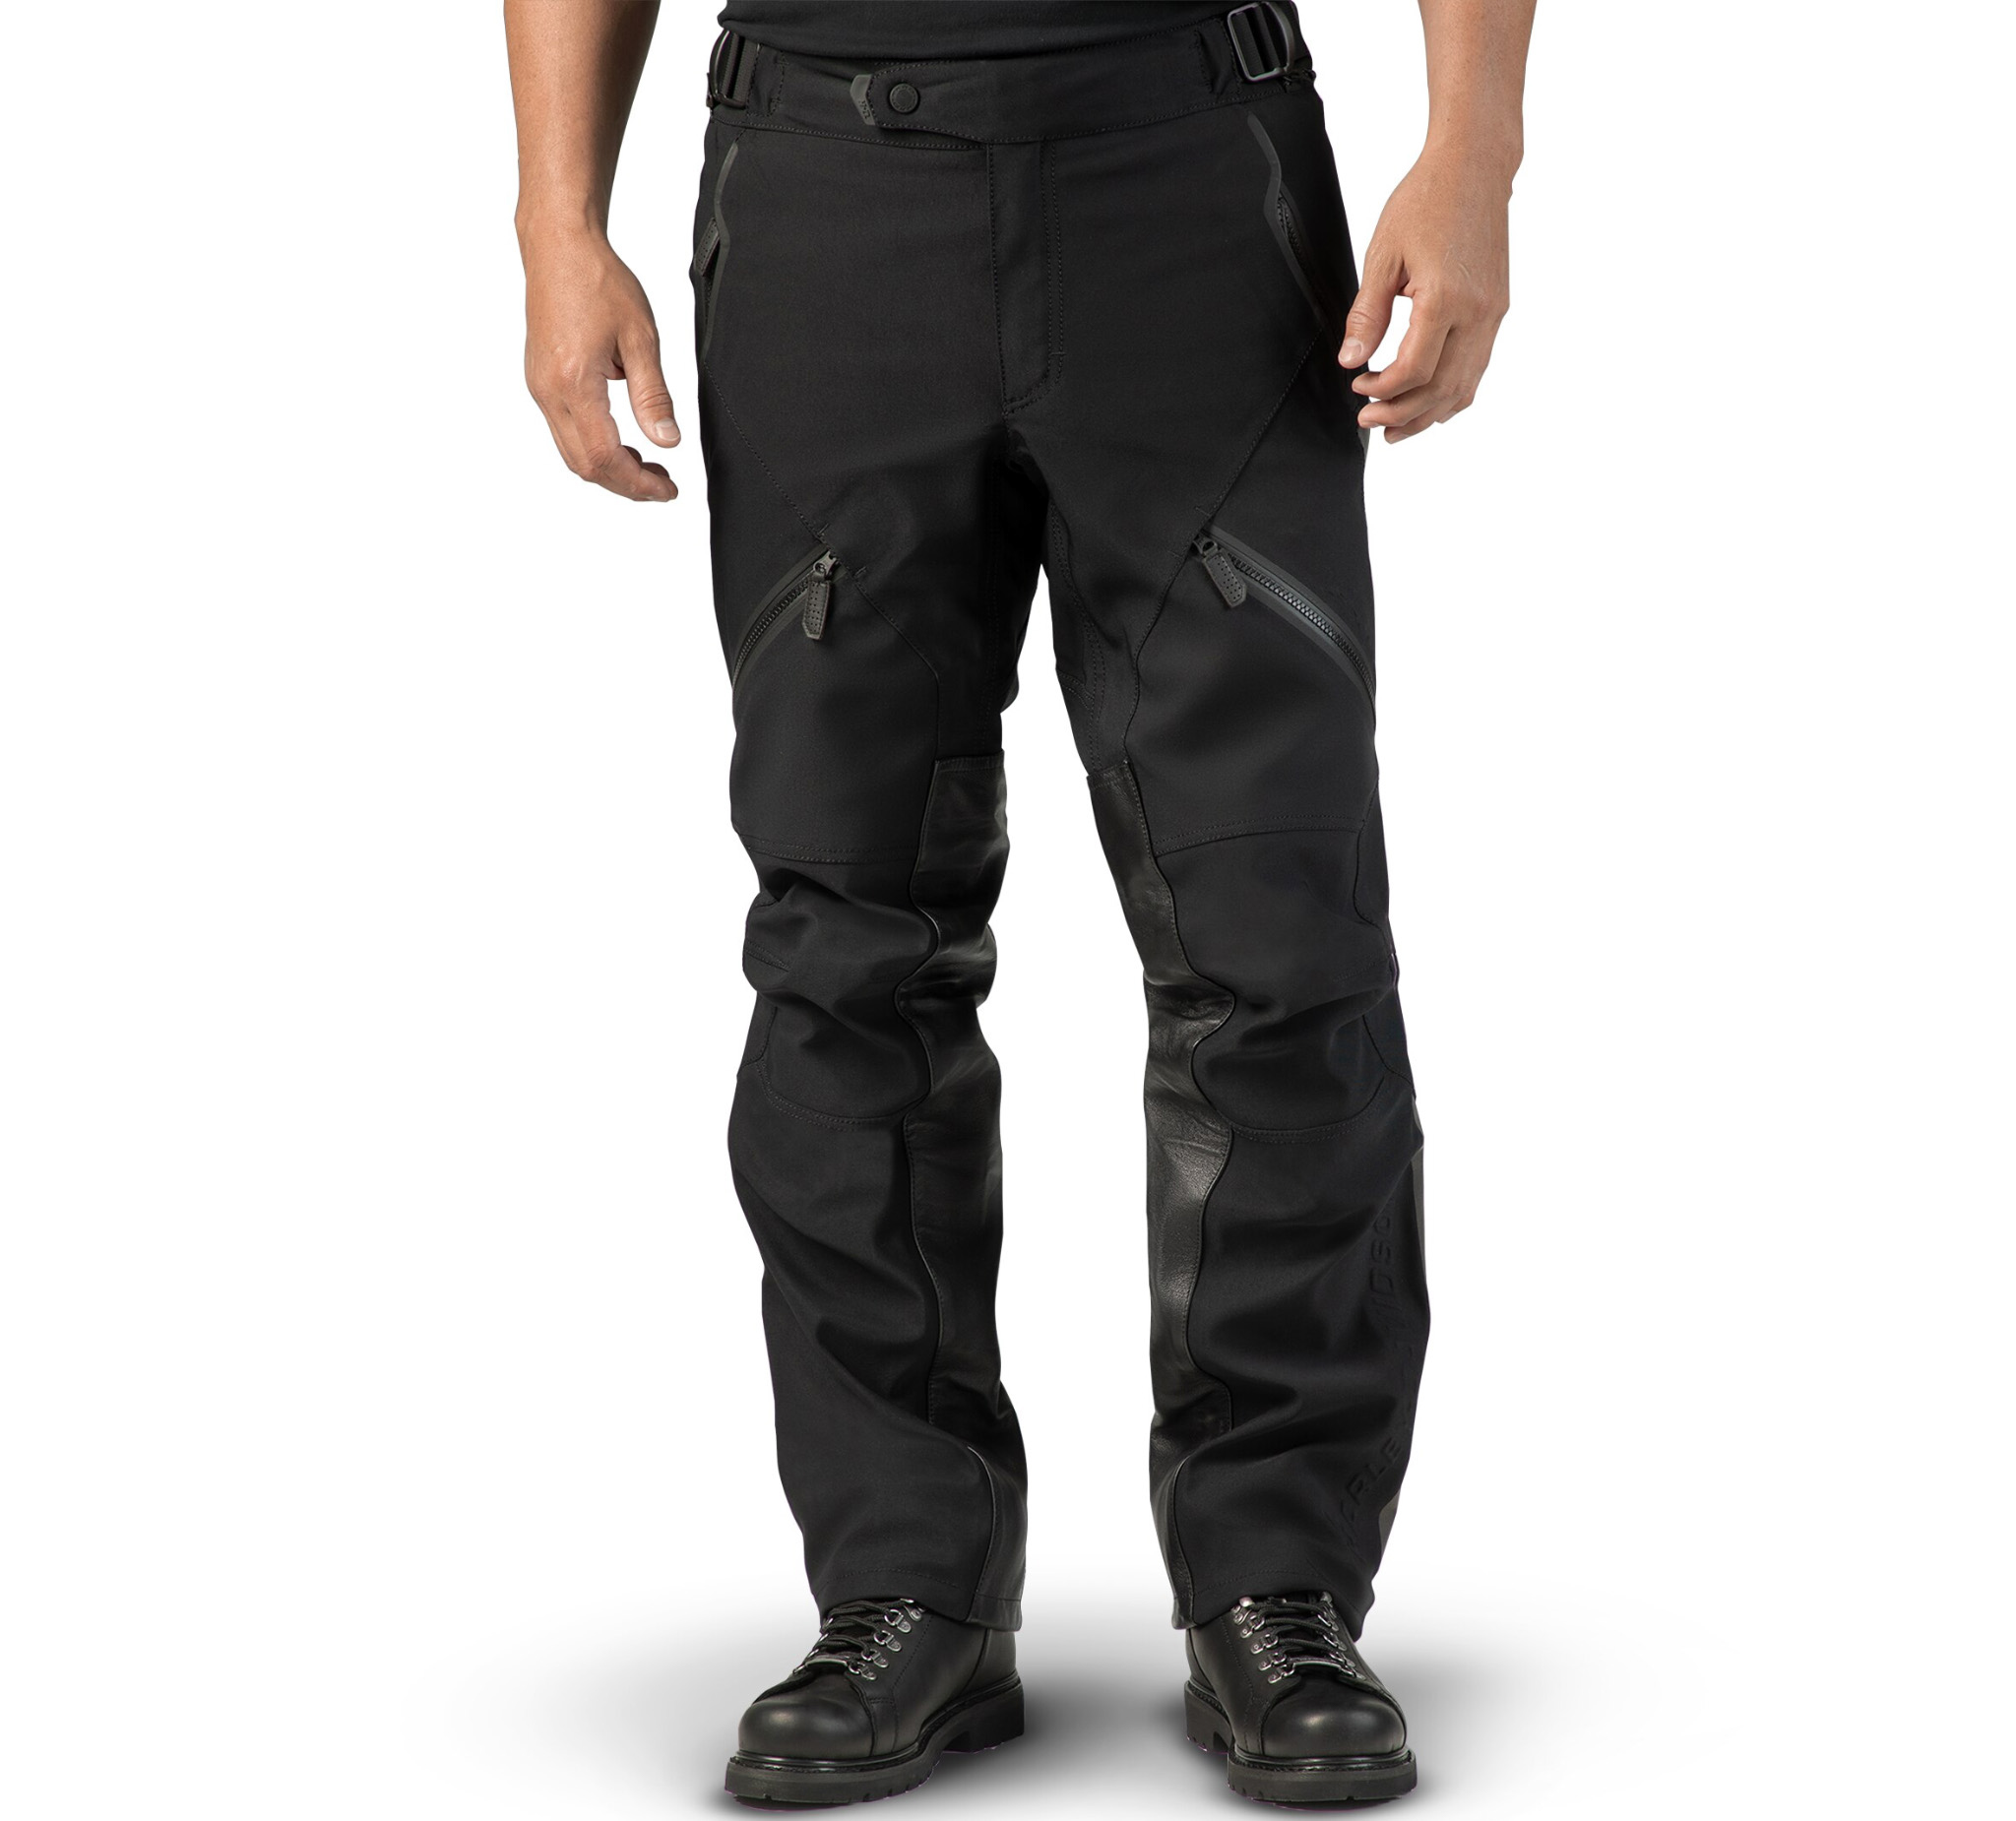 HARLEY DAVIDSON FXRG Leather PANTS | 30328 | Size: SM m 30